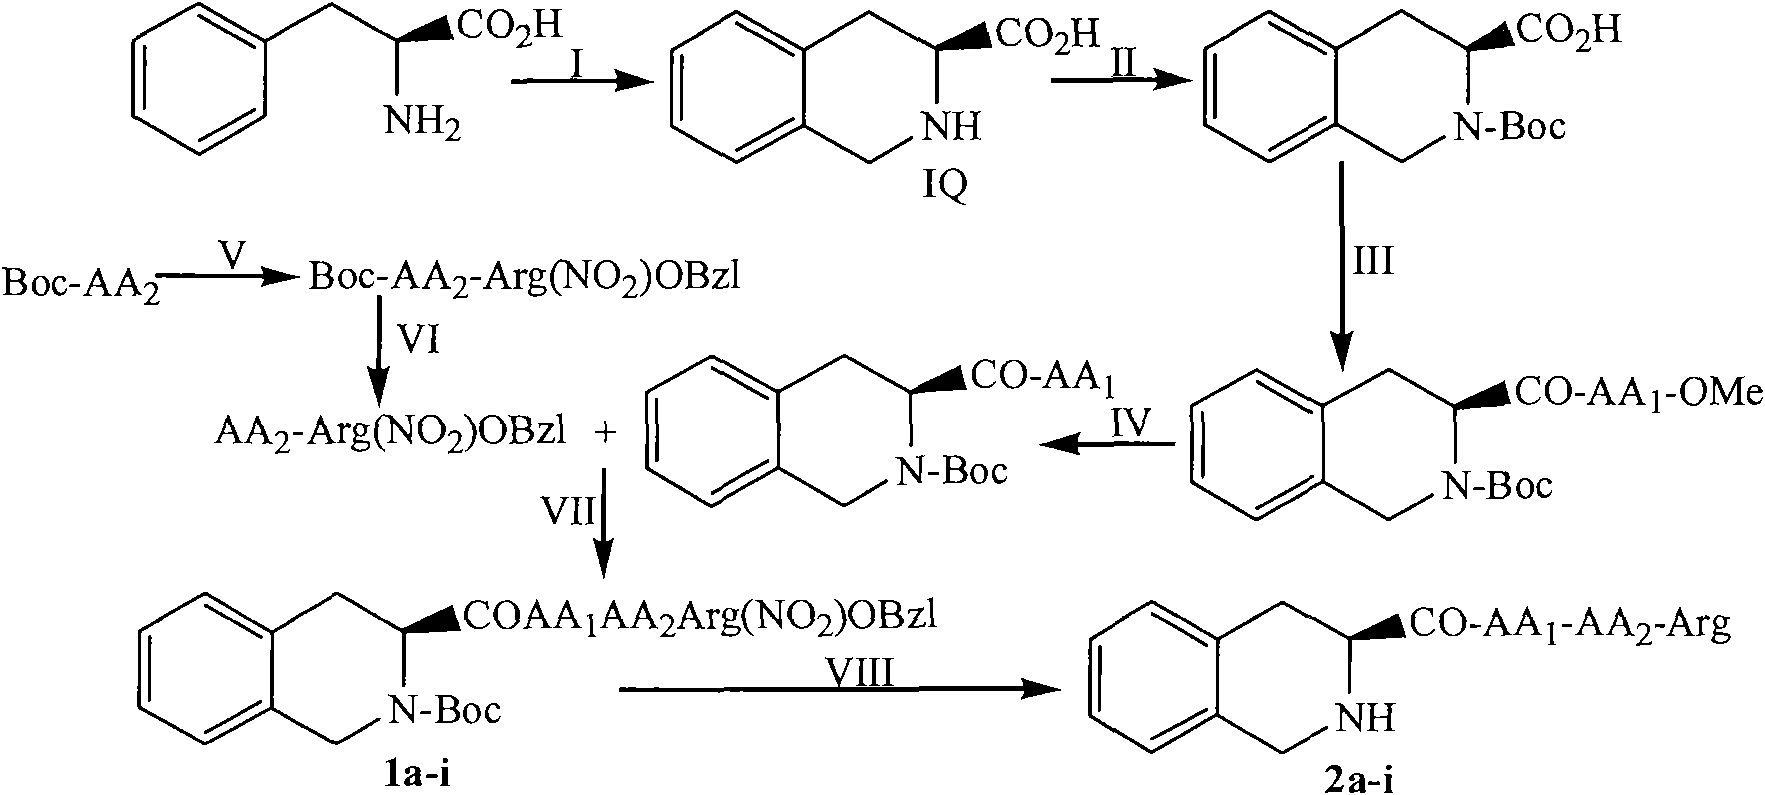 (3S)-1,2,3,4-tetrahydroisoquinoline-3-carboxylic acid kyrine conjugate, preparation method and application thereof